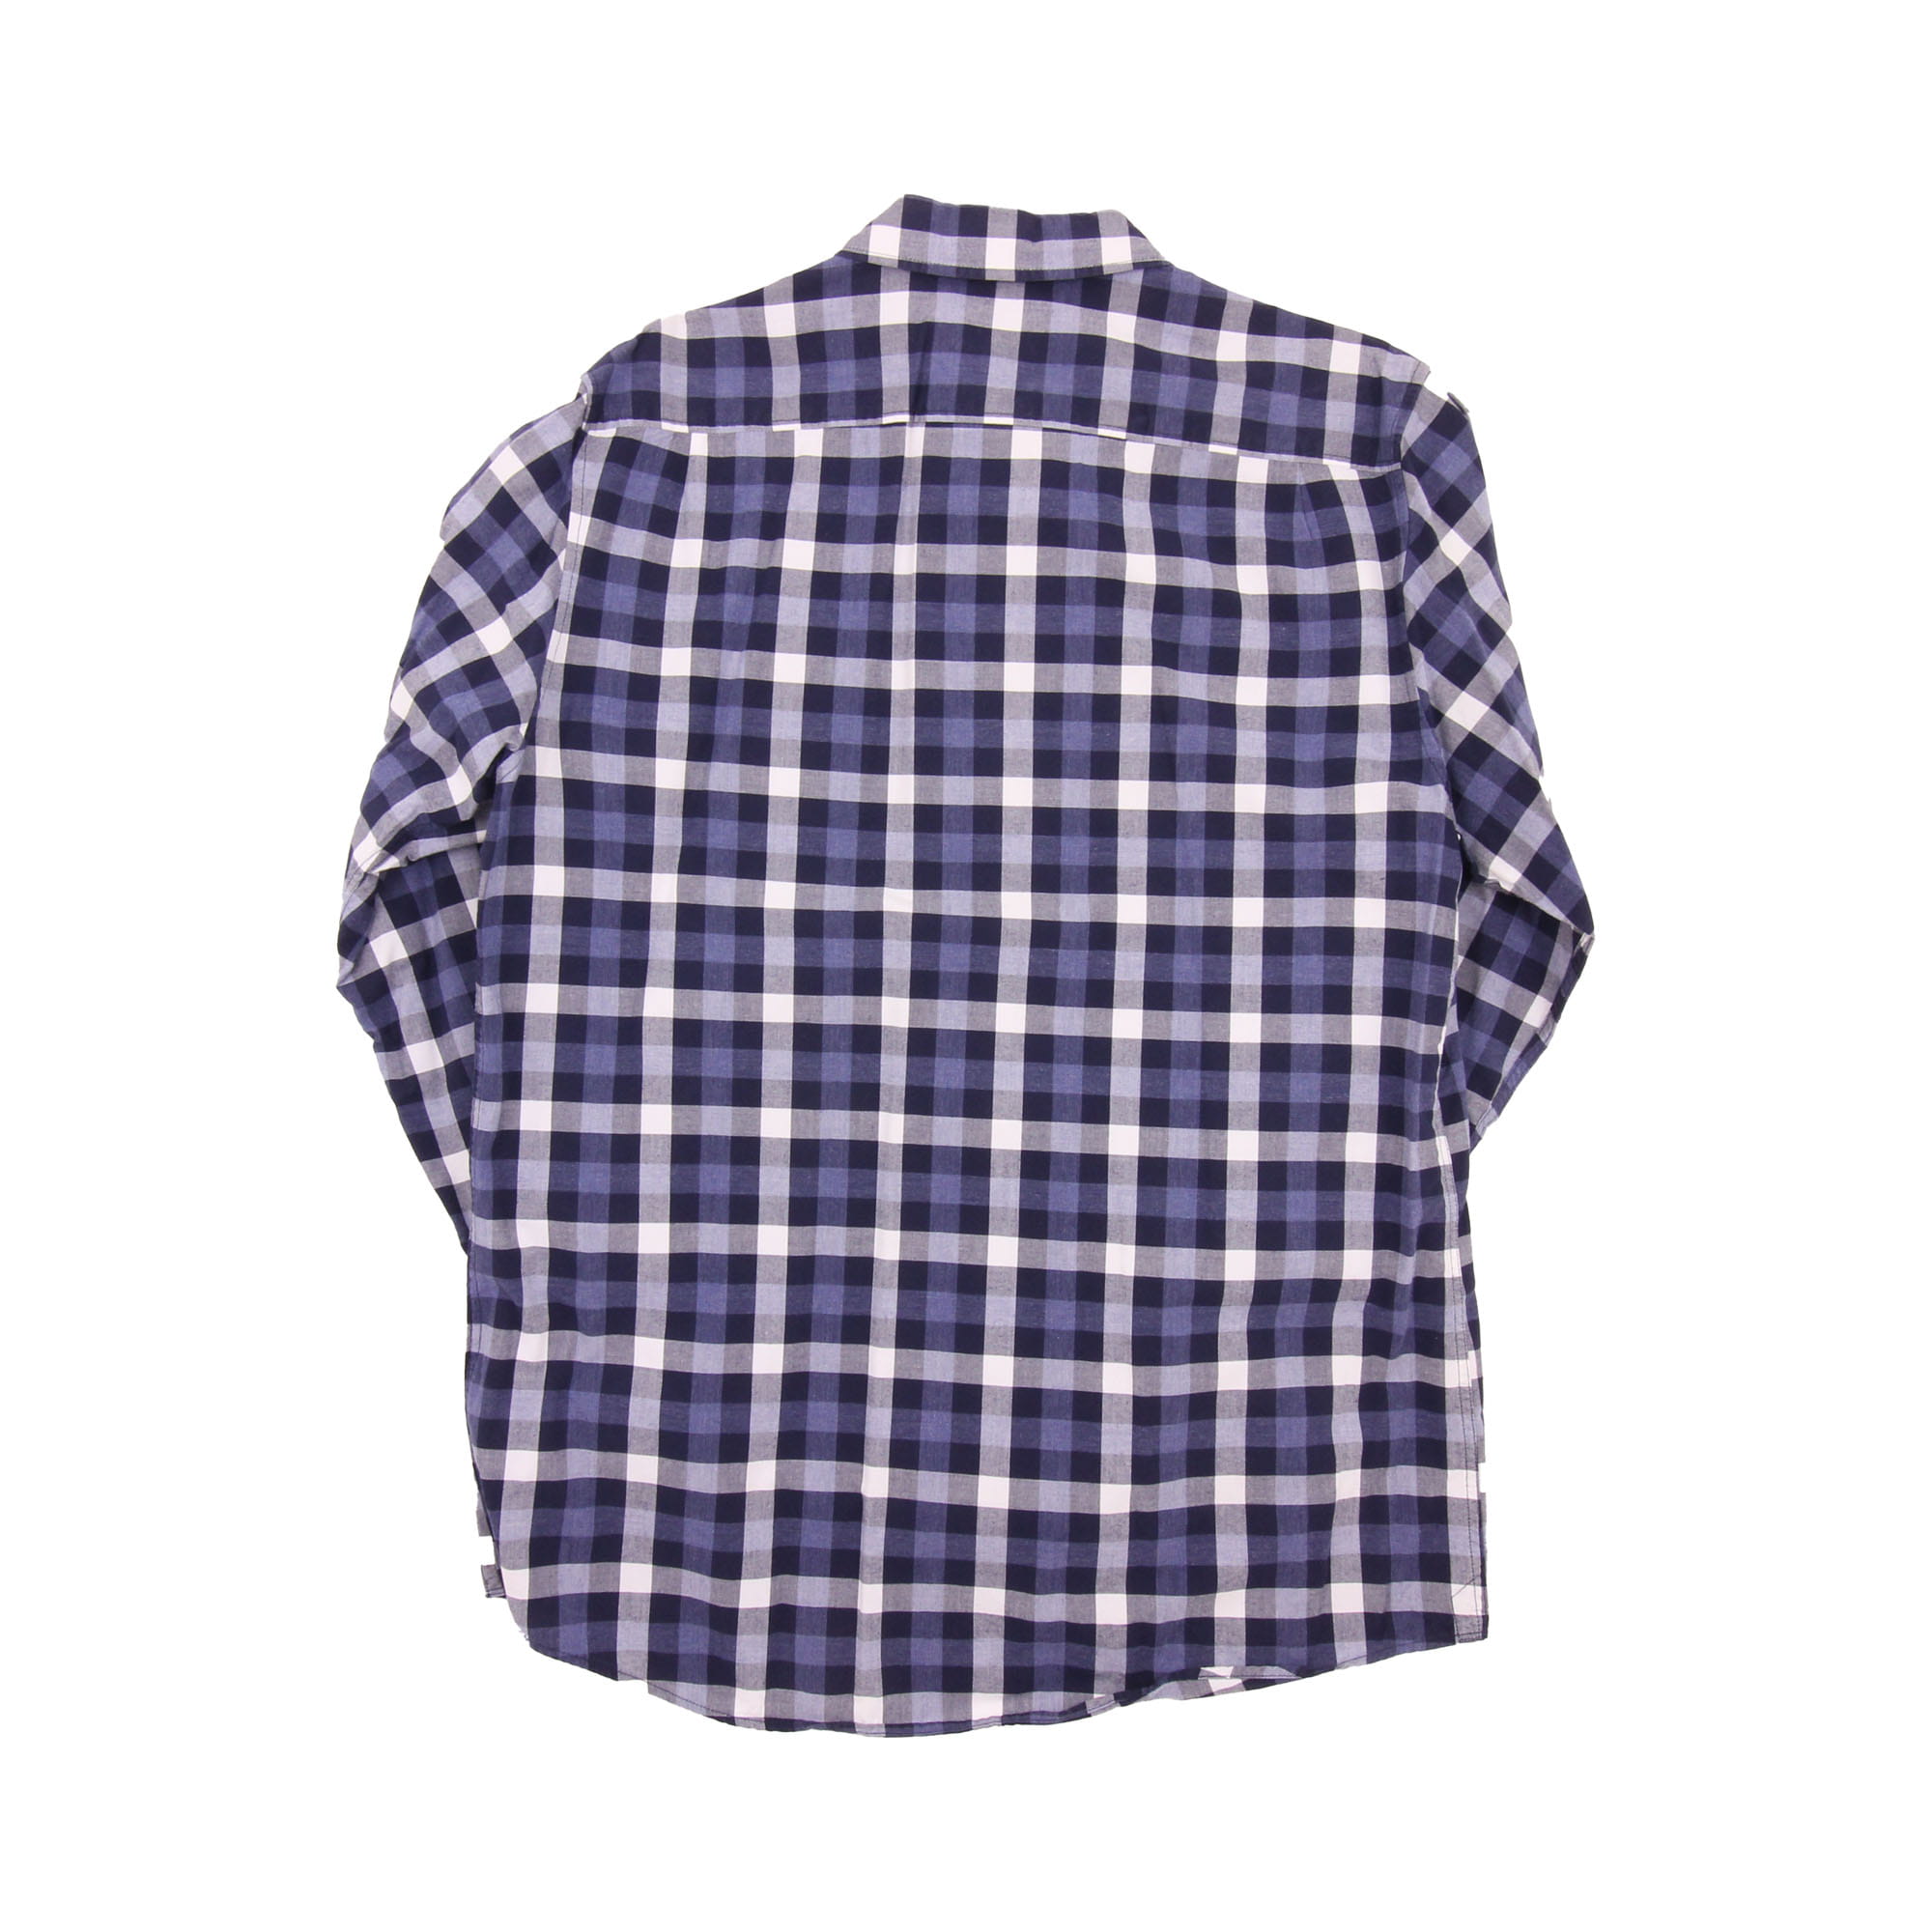 Jack Wills Long Sleeve Shirt -  L